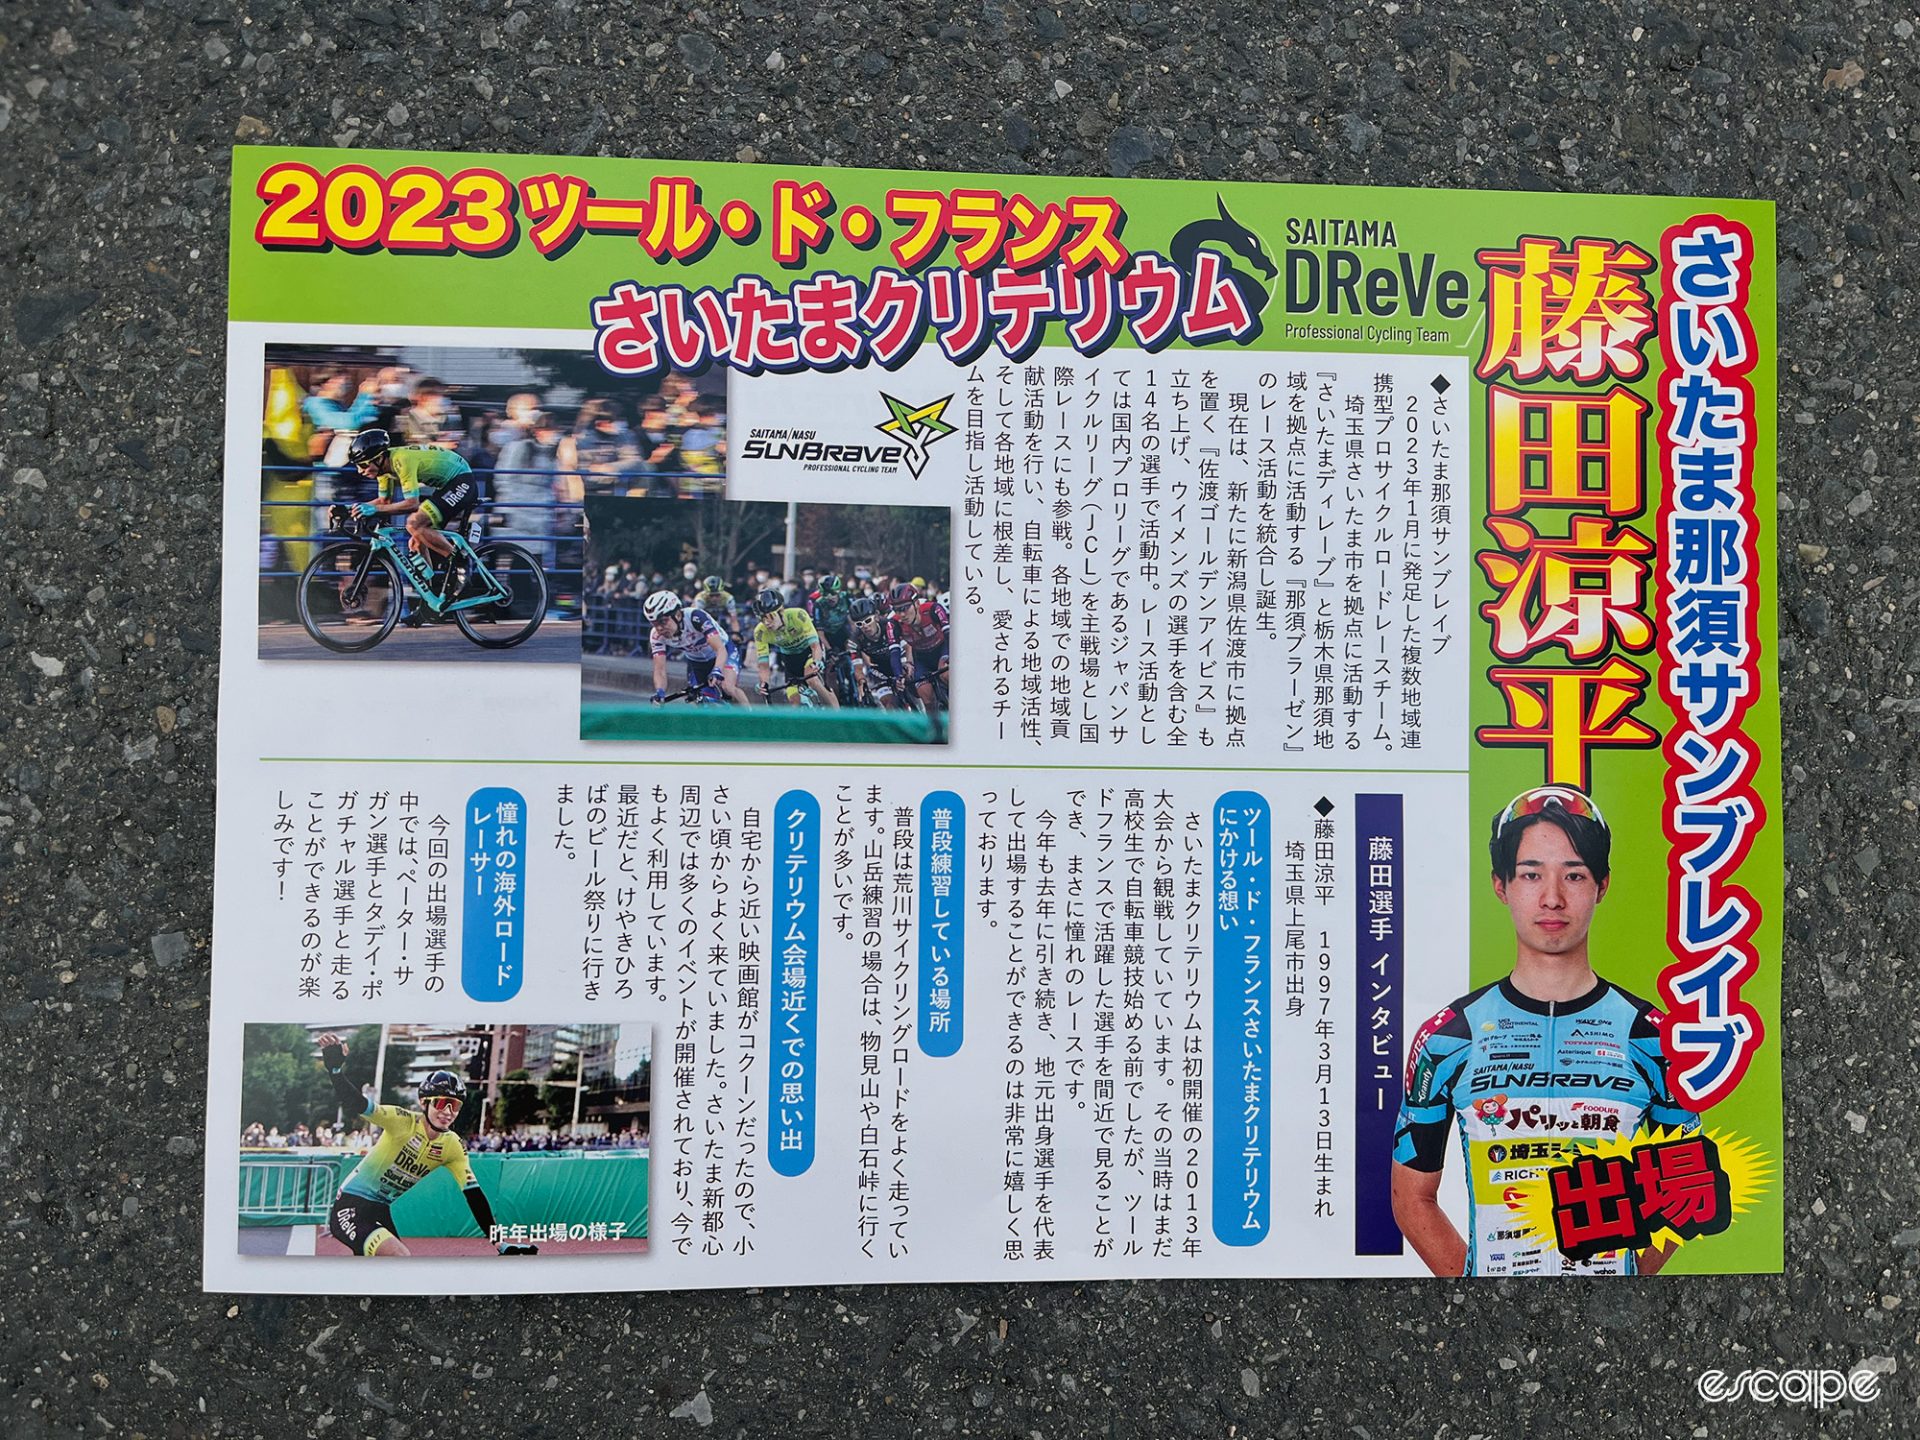 A leaflet promoting a local Saitama cycling team.